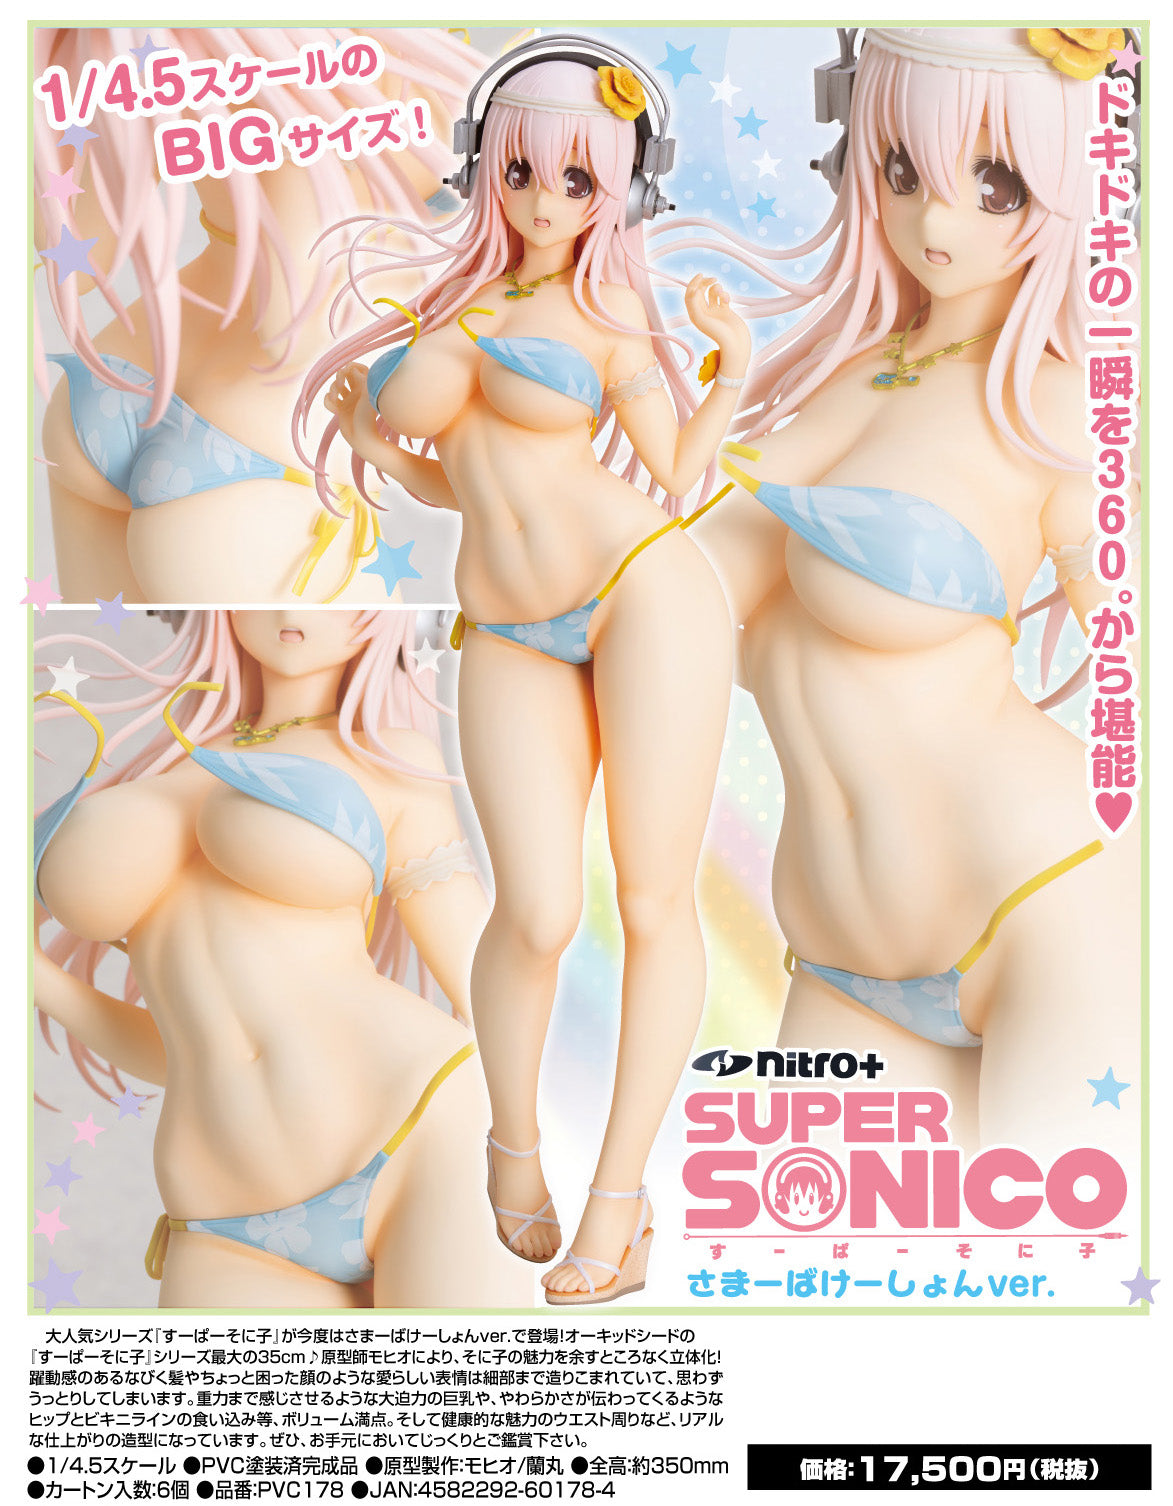 SoniComi (Super Sonico) - Sonico - 1/4.5 - Summer Vacation ver